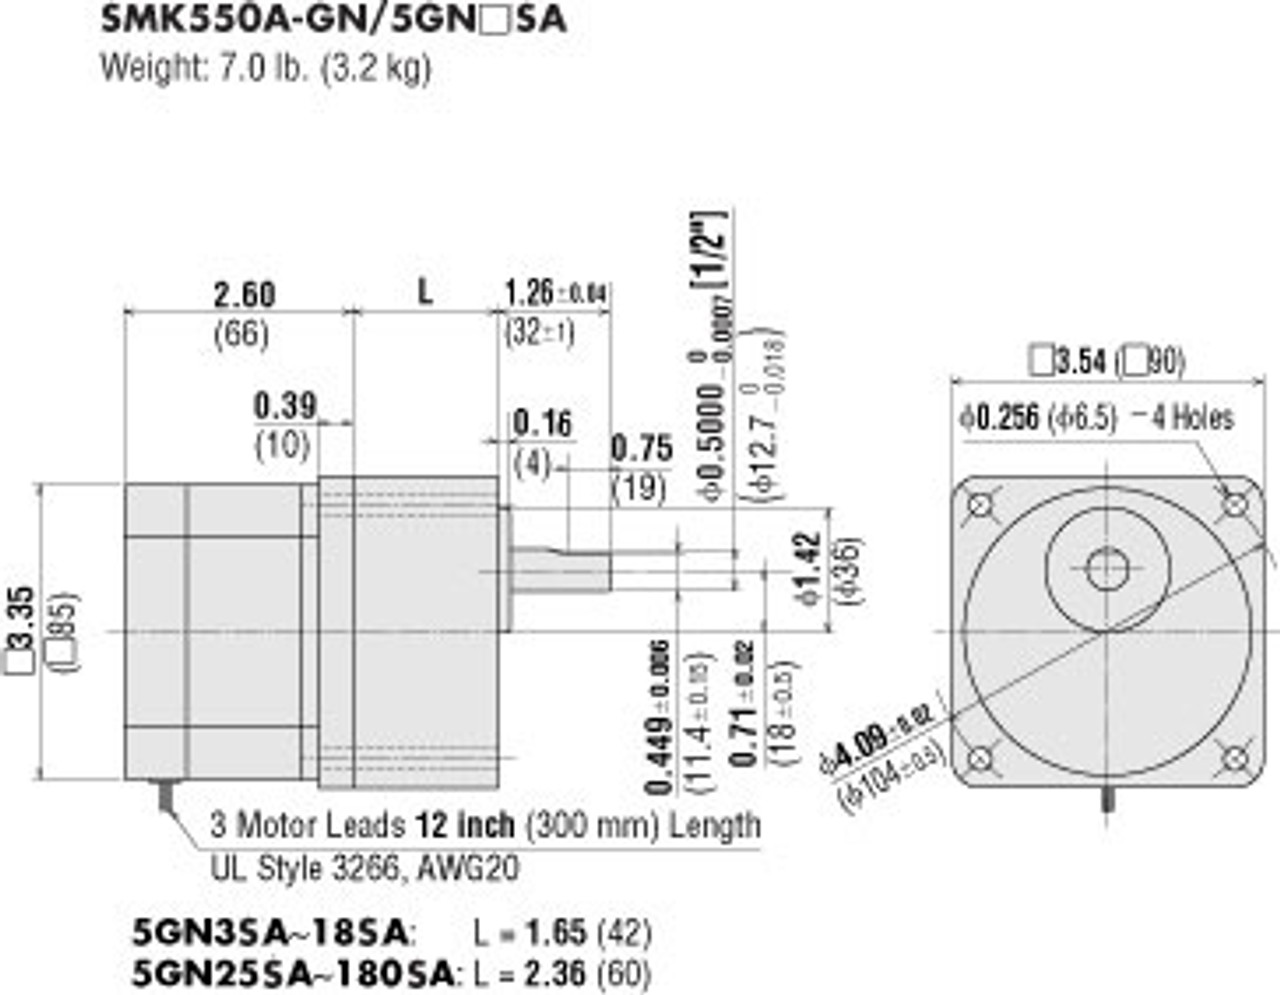 SMK550A-GN / 5GN50SA - Dimensions